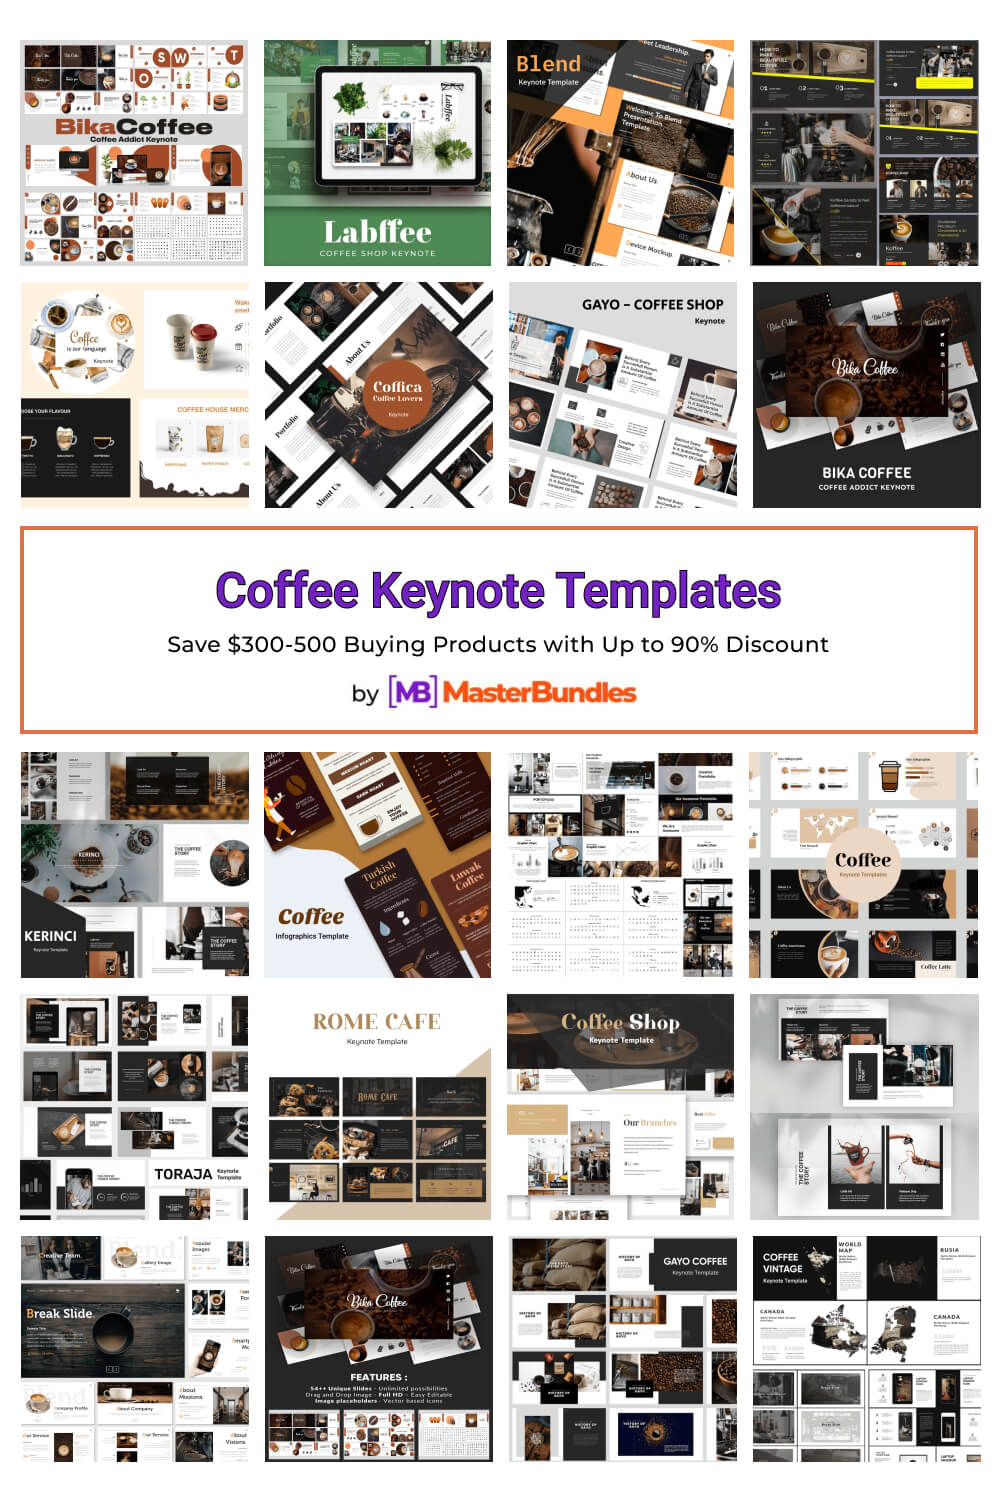 coffee keynote templates pinterest image.